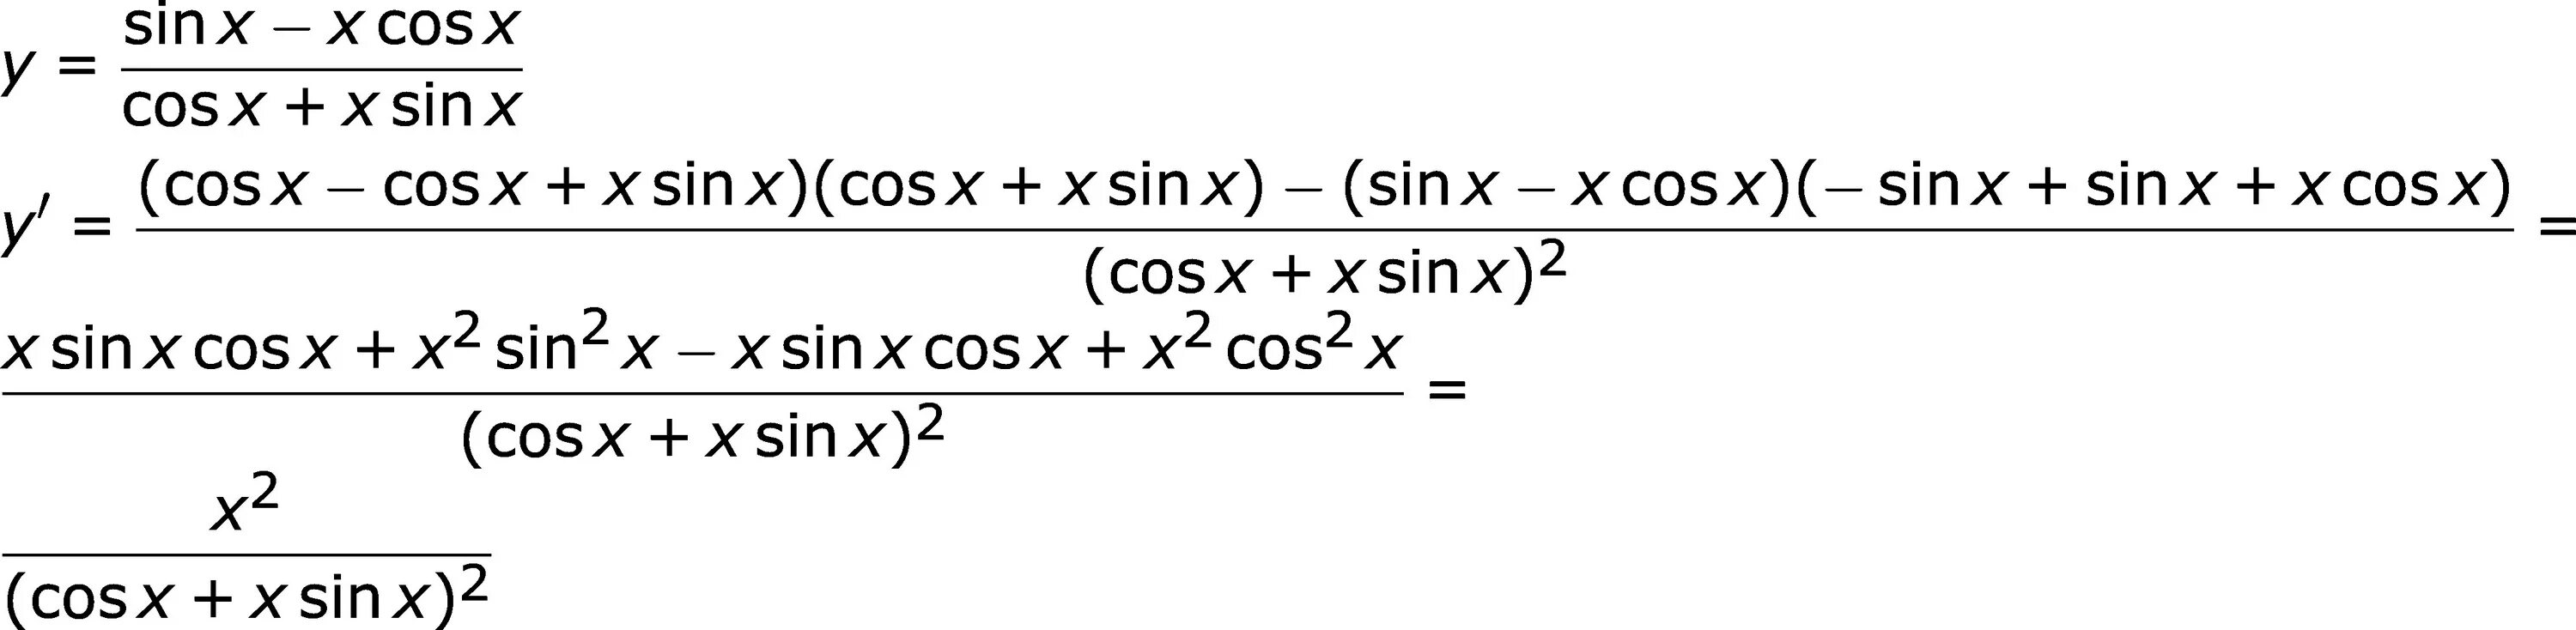 F x 3 sinx cosx. Производная cos x. ((Sin x+cos x)/(sin x-cos x)) производная. Производная sinx cosx. Sin x cos x производная.